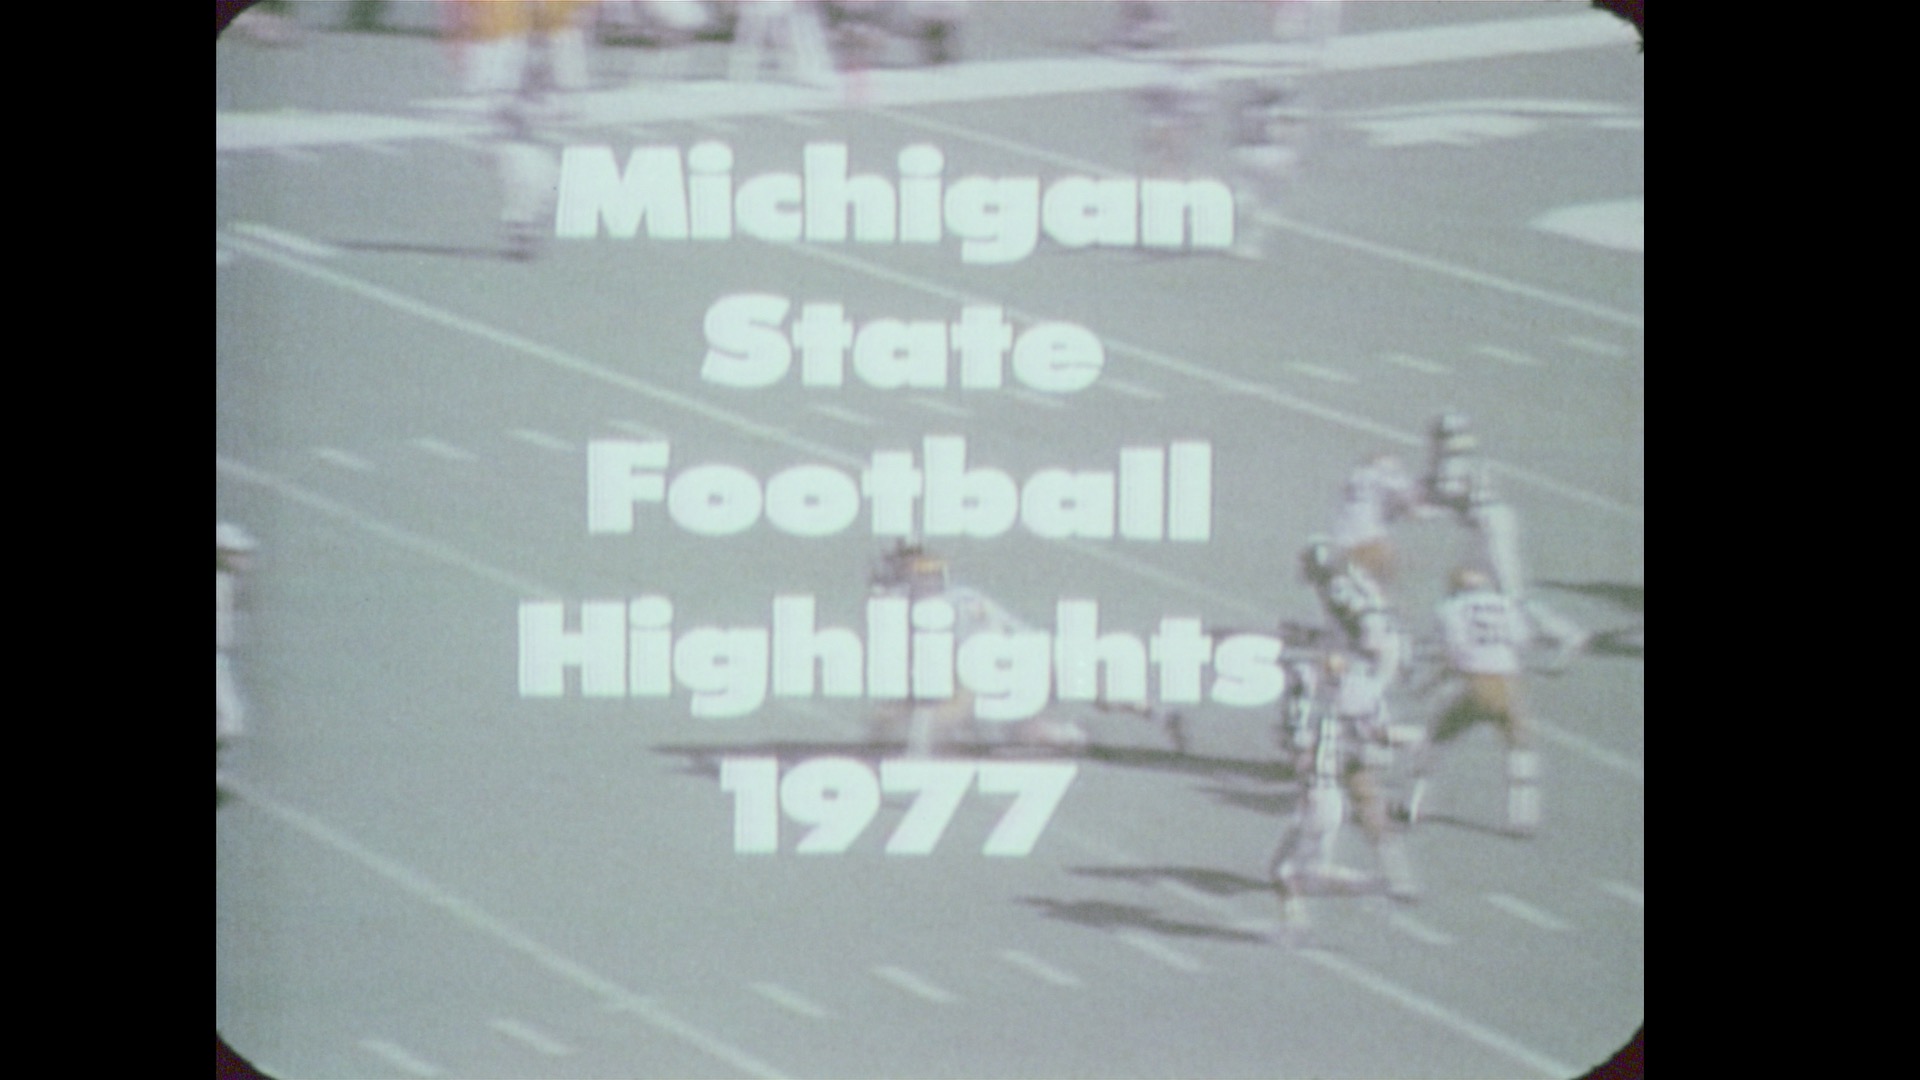 Michigan State Football Highlights, 1977